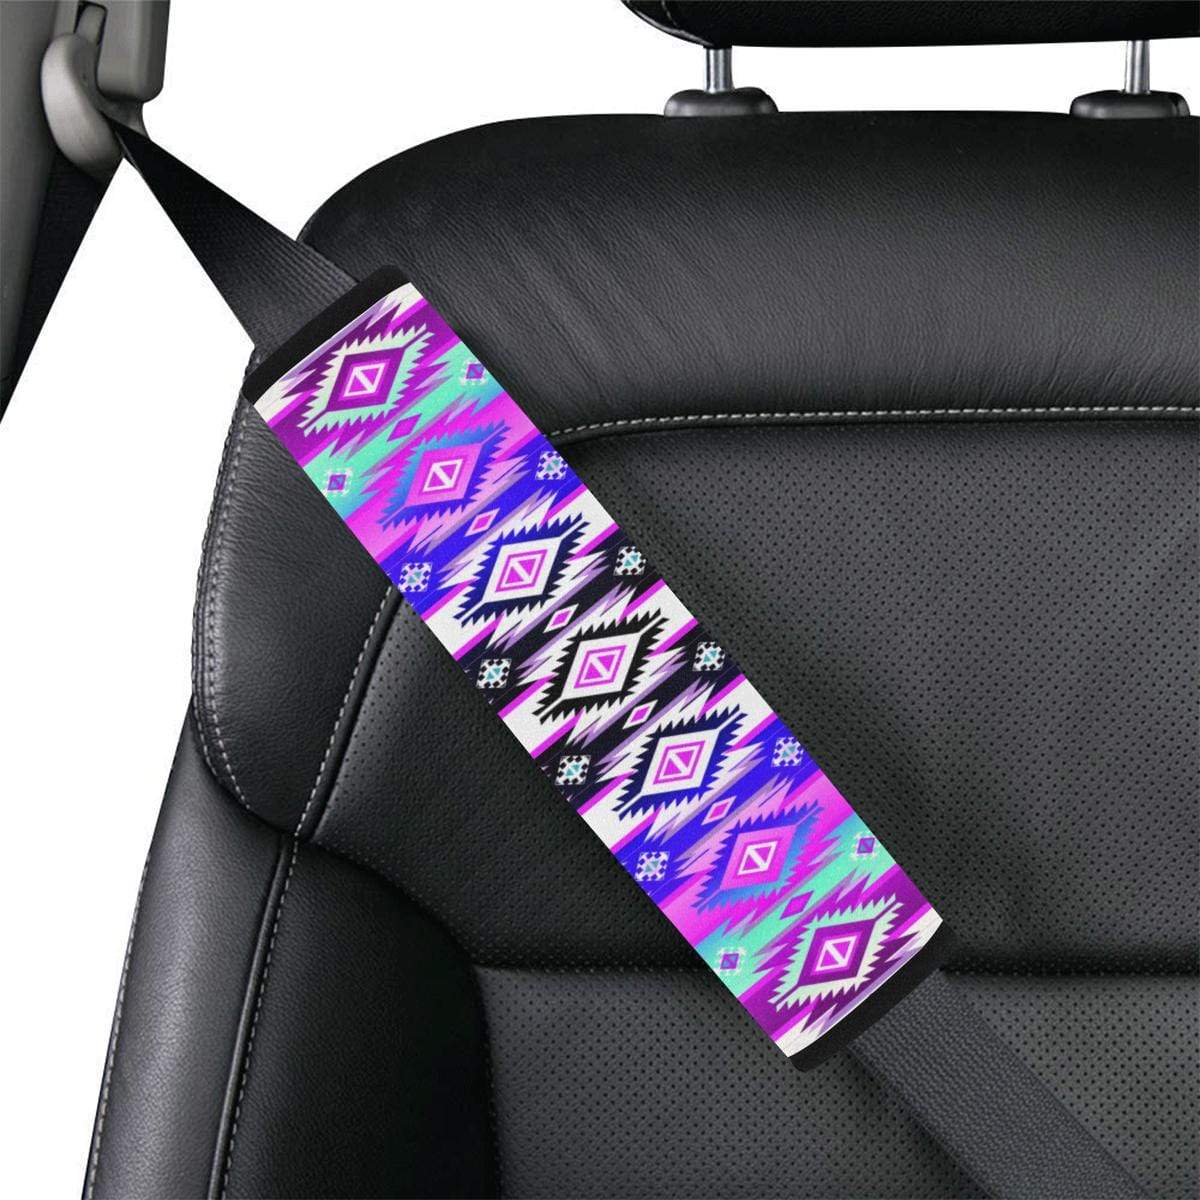 Adobe Dance Car Seat Belt Cover 7''x12.6'' Car Seat Belt Cover 7''x12.6'' e-joyer 